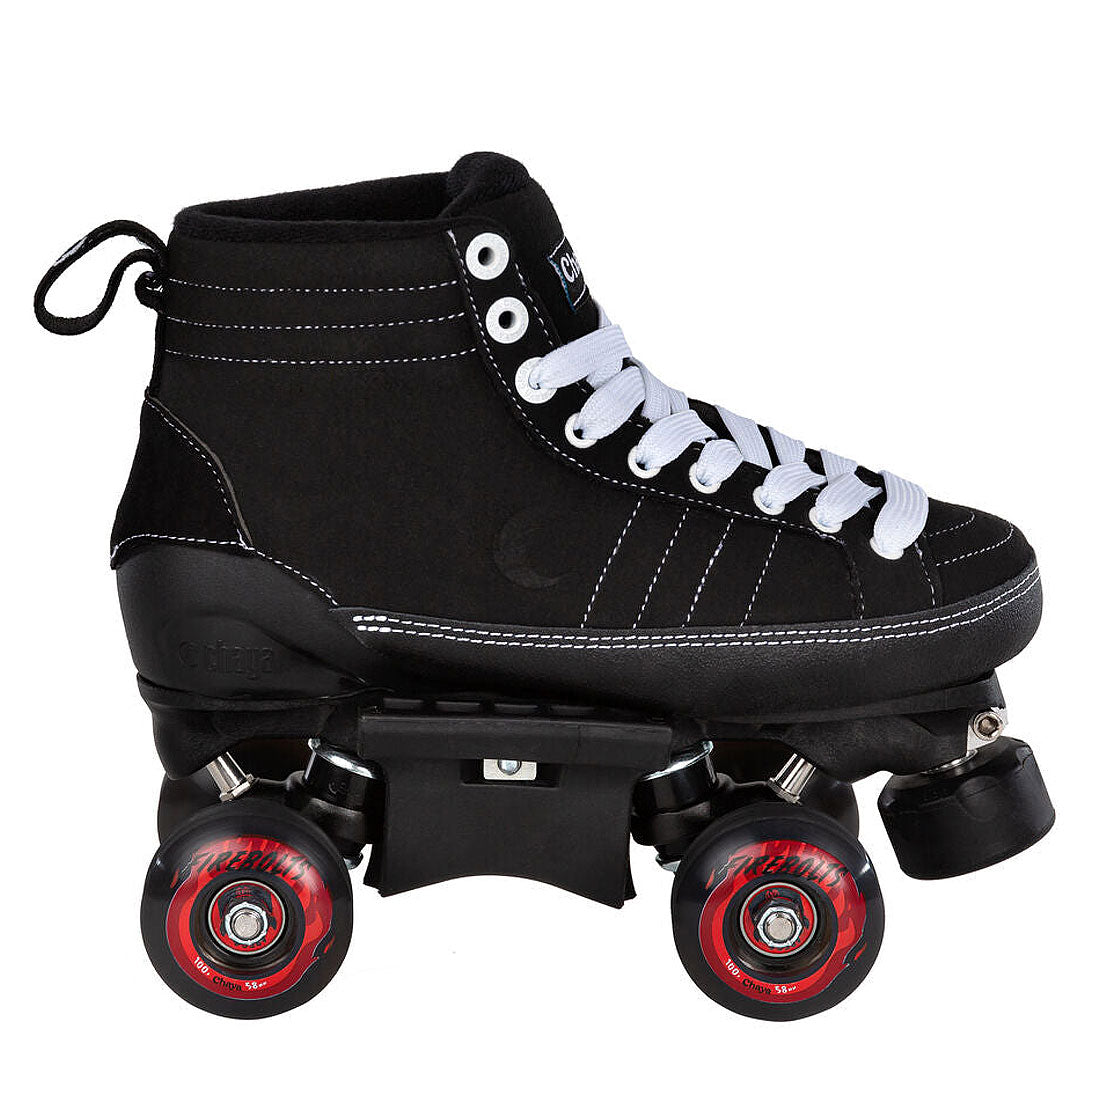 Chaya Karma Pro Skate - Black Roller Skates